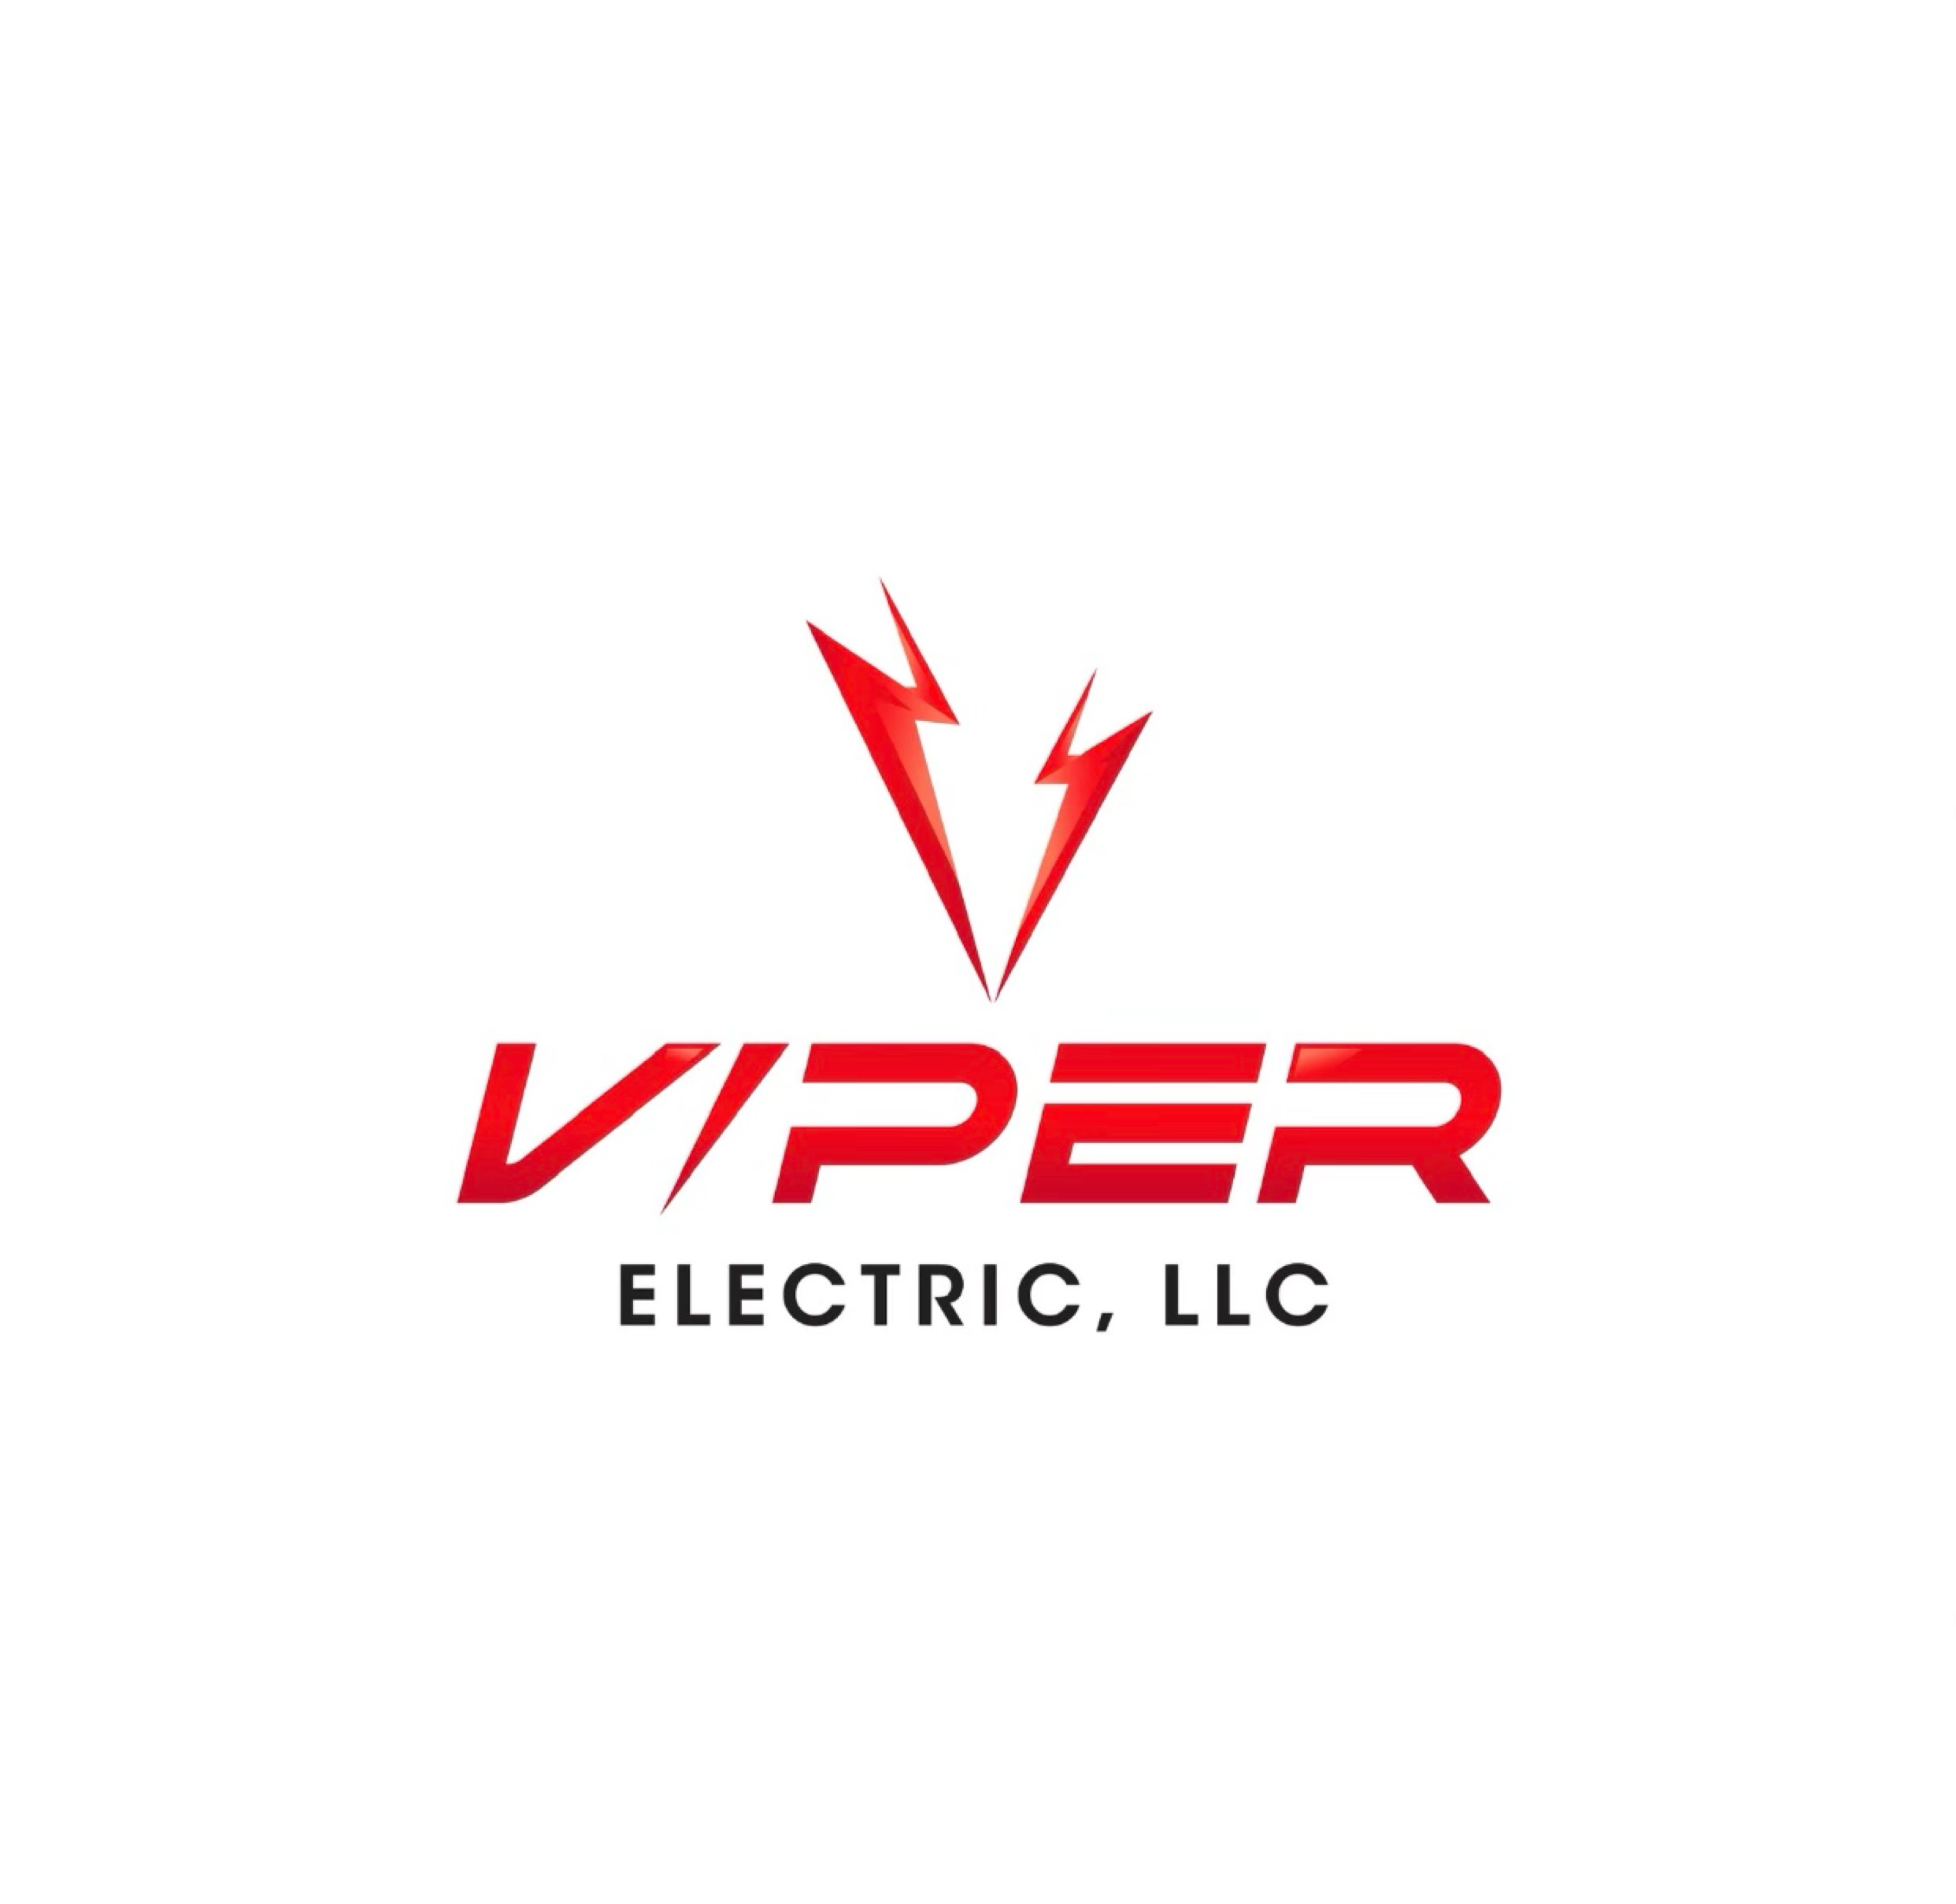 VIPER ELECTRIC LLC Logo